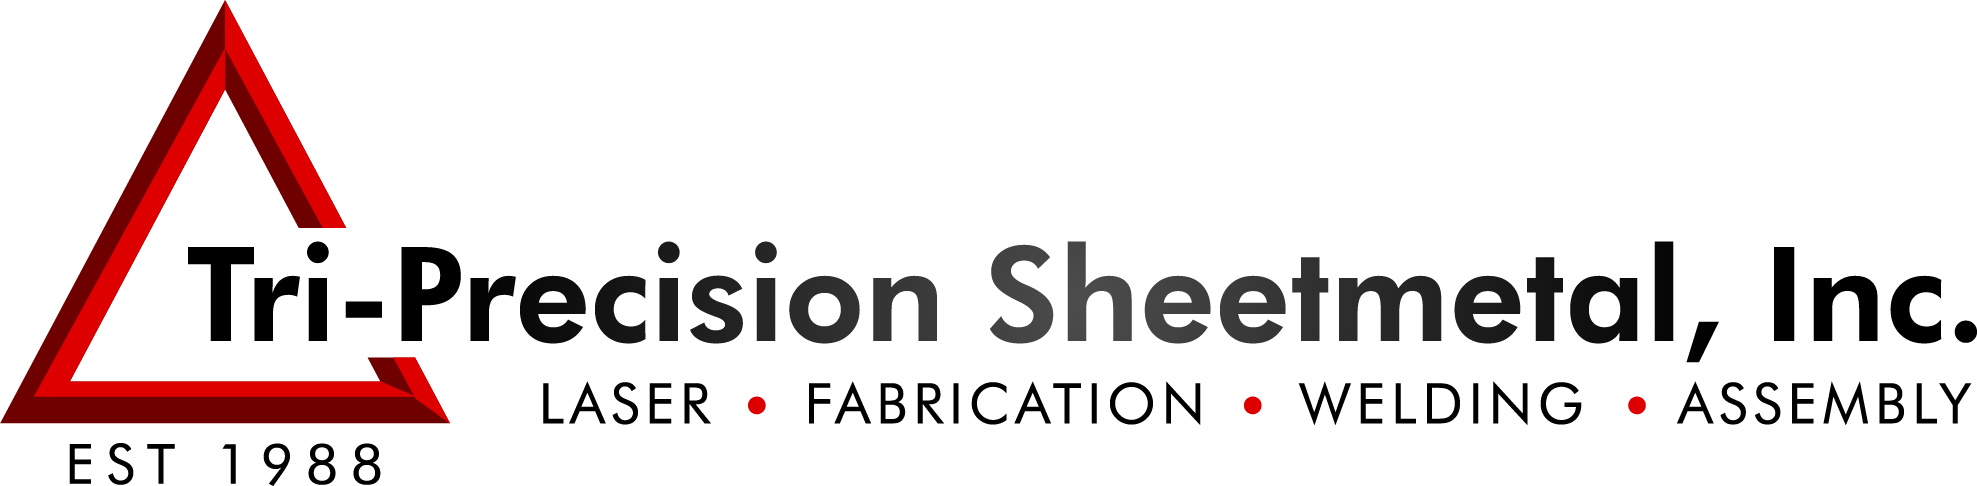 Tri-Precision Sheetmetal, Inc. Logo